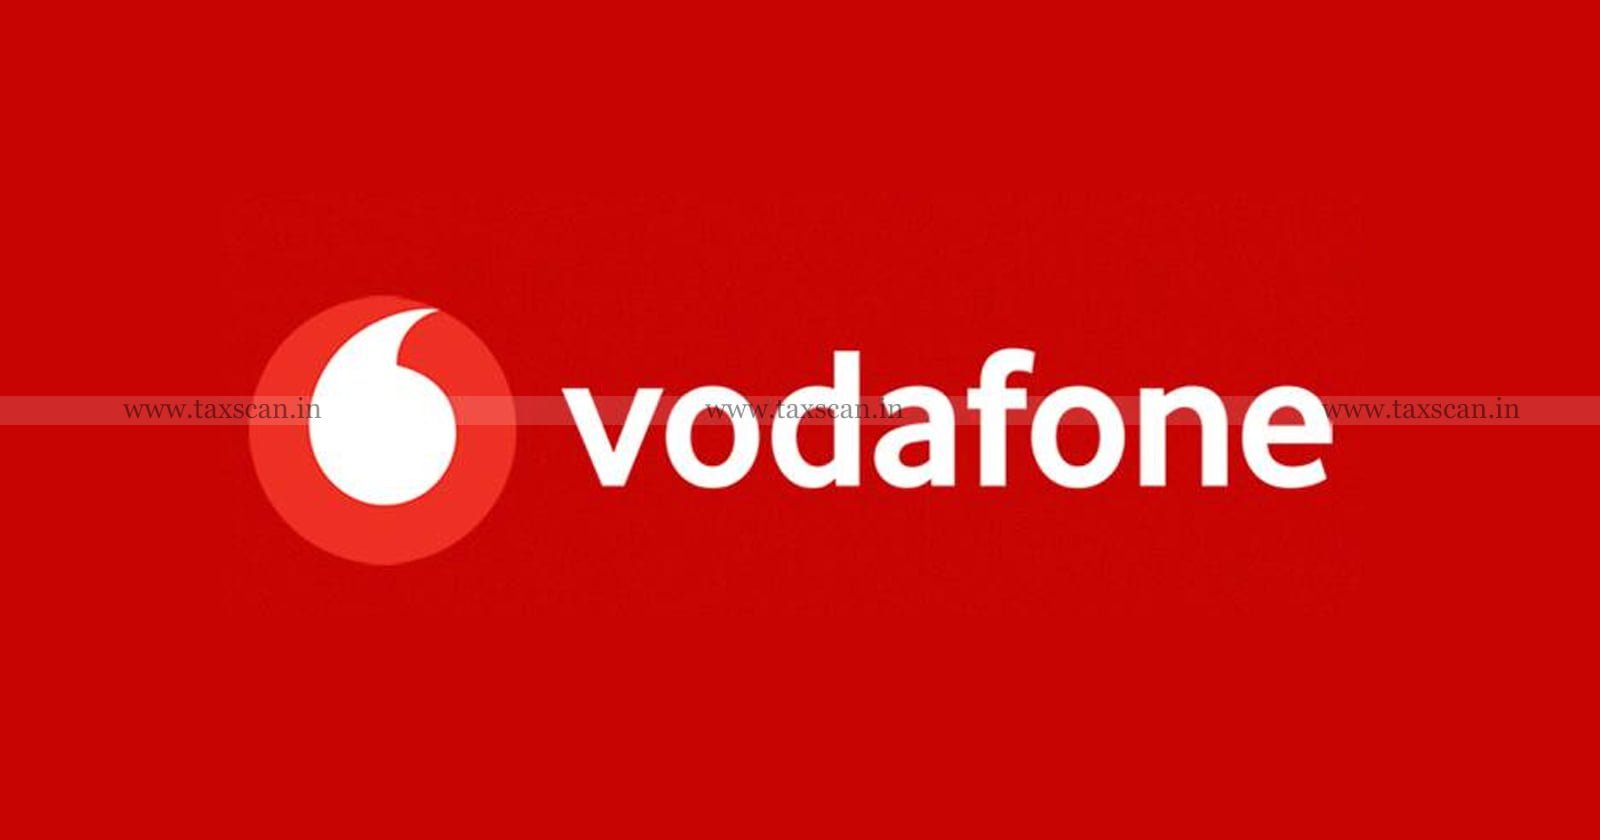 Roaming Charges - Vodafone India - Telecom Operators - TDS - Income Tax Act - ITAT - taxscan